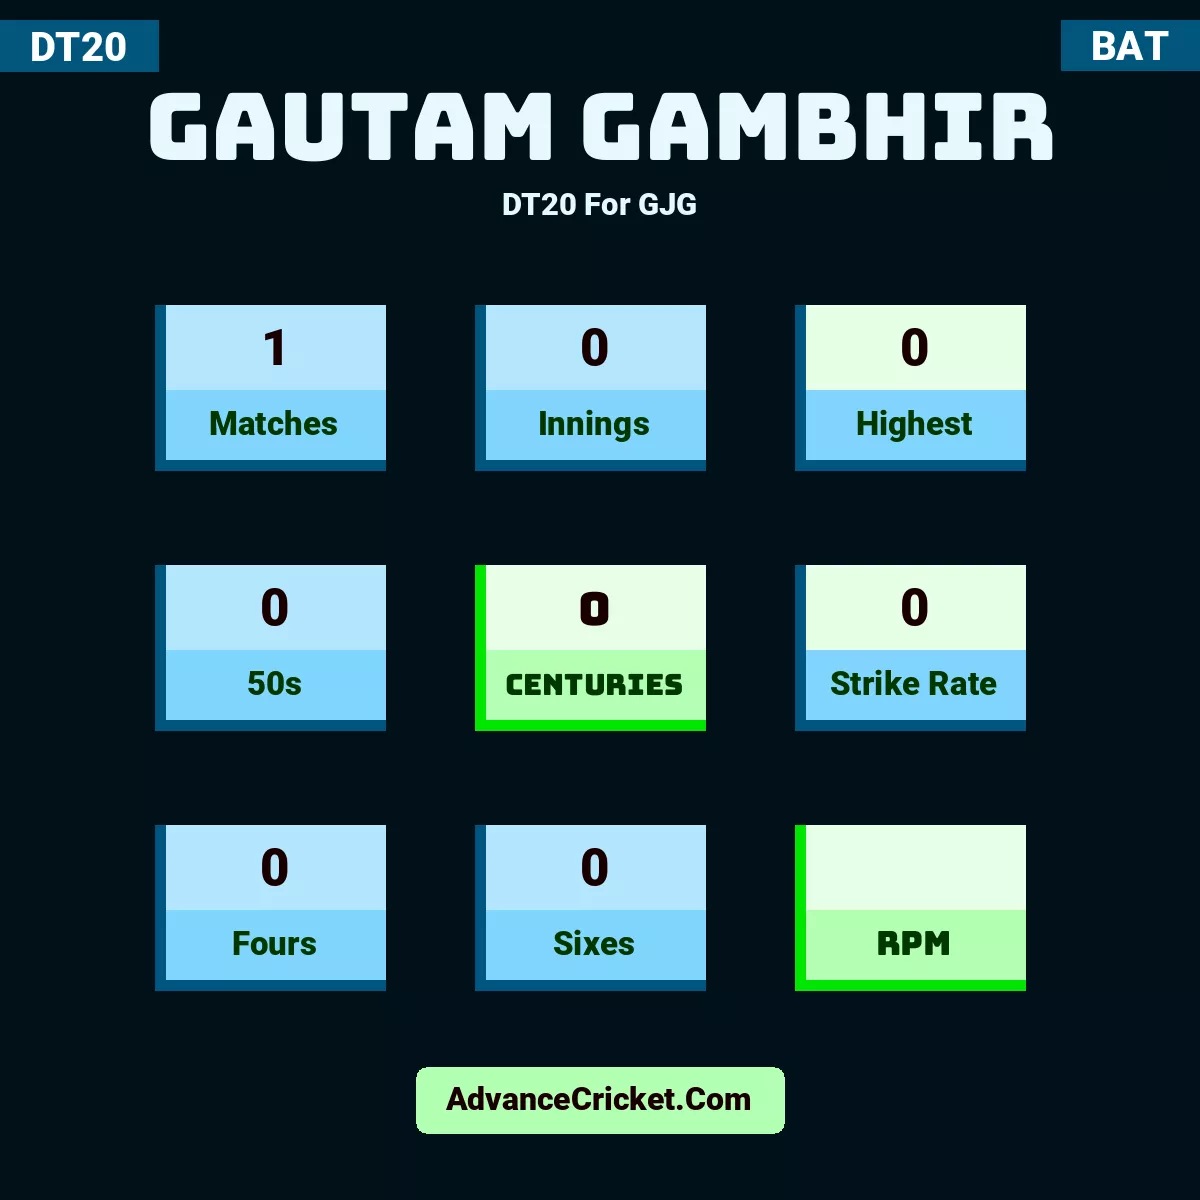 Gautam Gambhir DT20  For GJG, Gautam Gambhir played 1 matches, scored 0 runs as highest, 0 half-centuries, and 0 centuries, with a strike rate of 0. G.Gambhir hit 0 fours and 0 sixes.